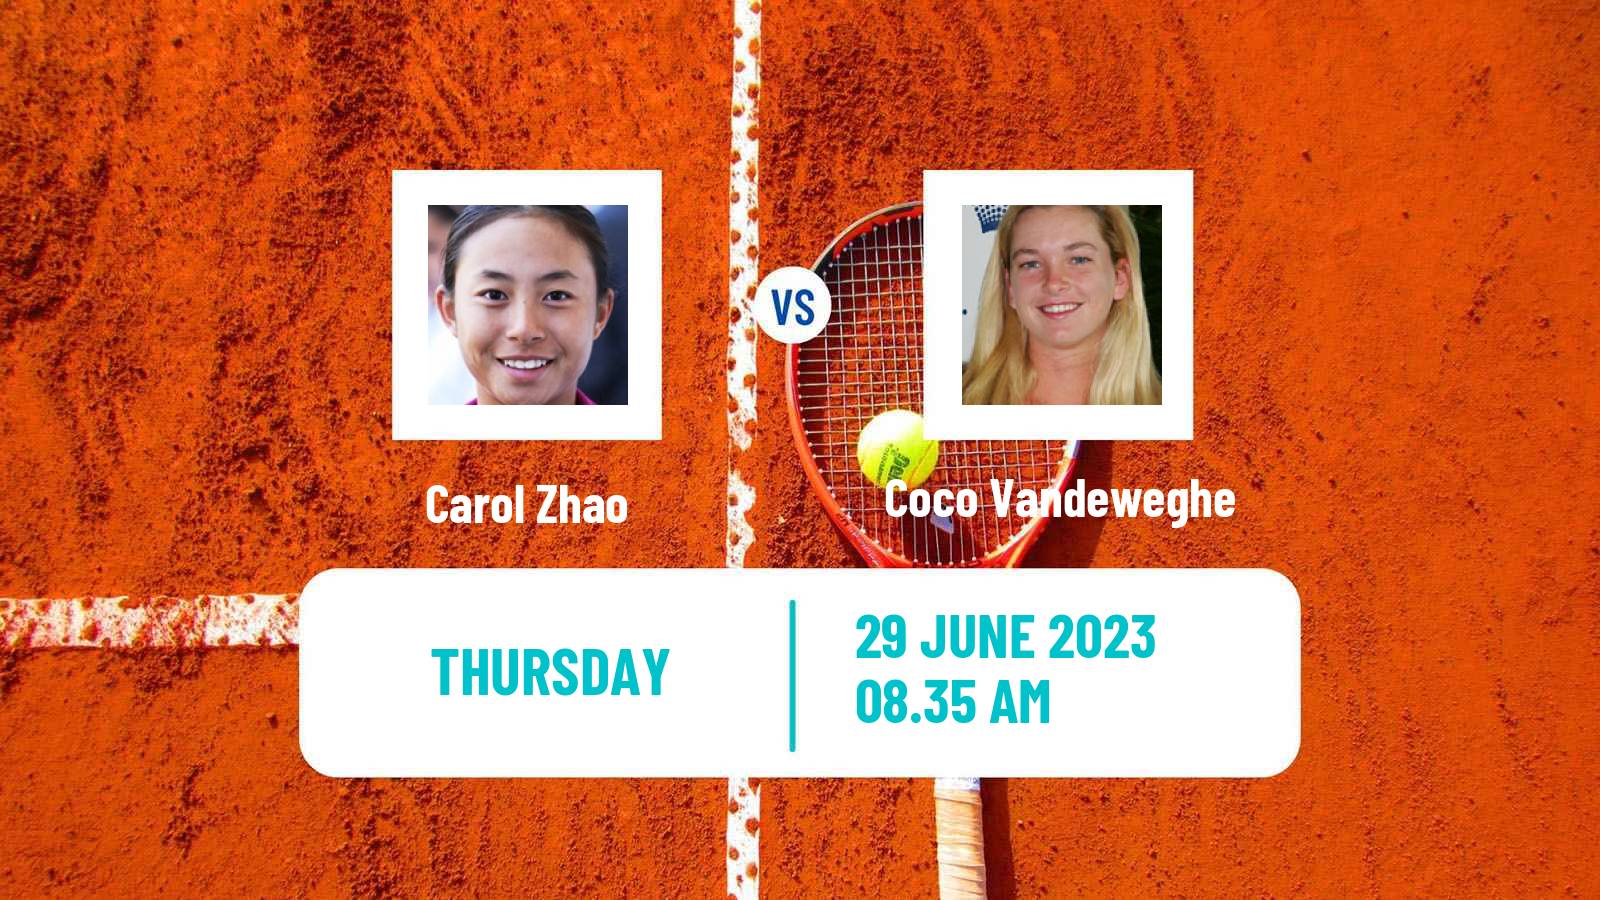 Tennis WTA Wimbledon Carol Zhao - Coco Vandeweghe